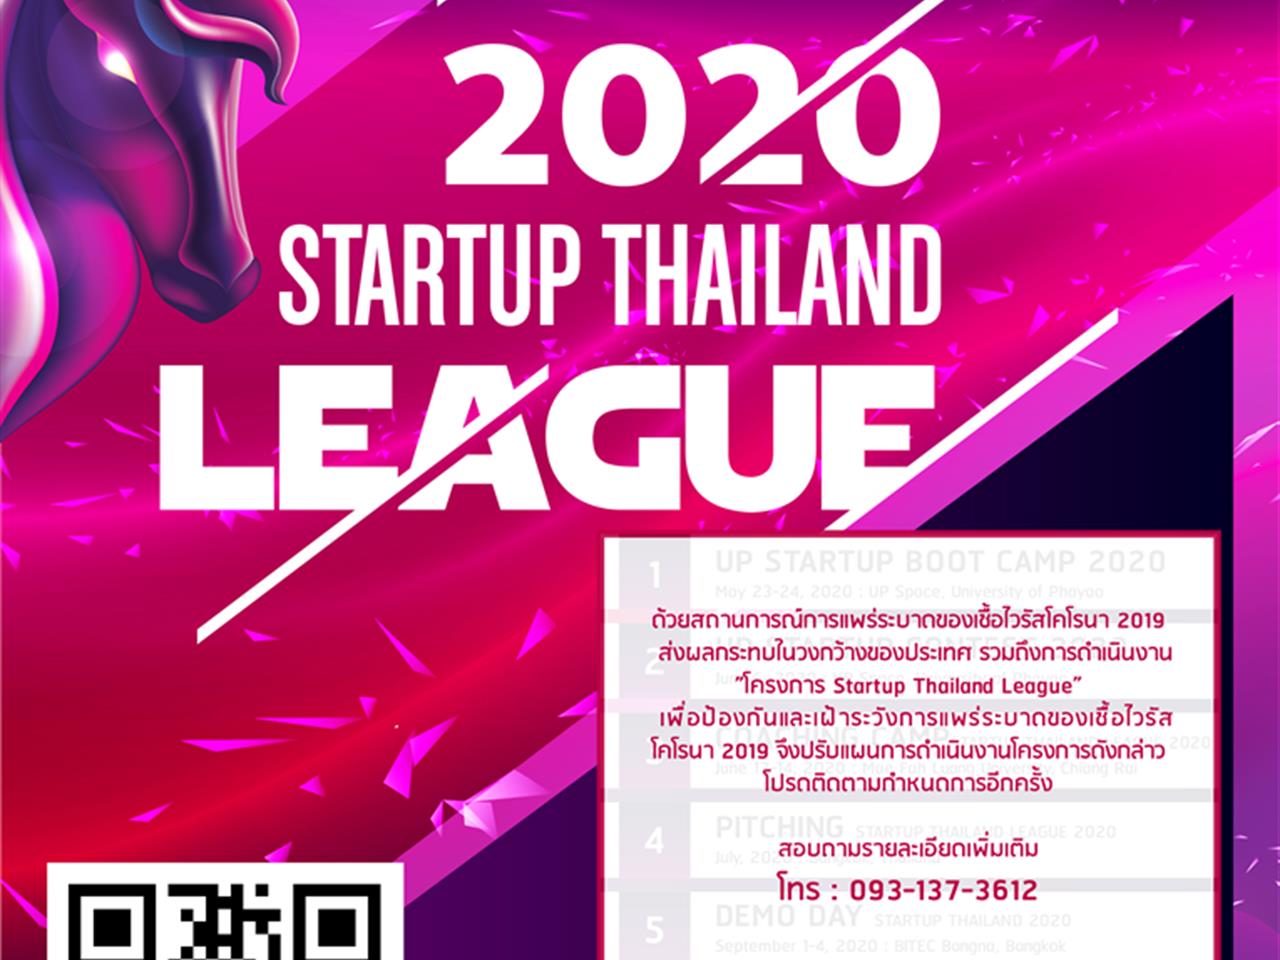 Startup Thailand League 2020